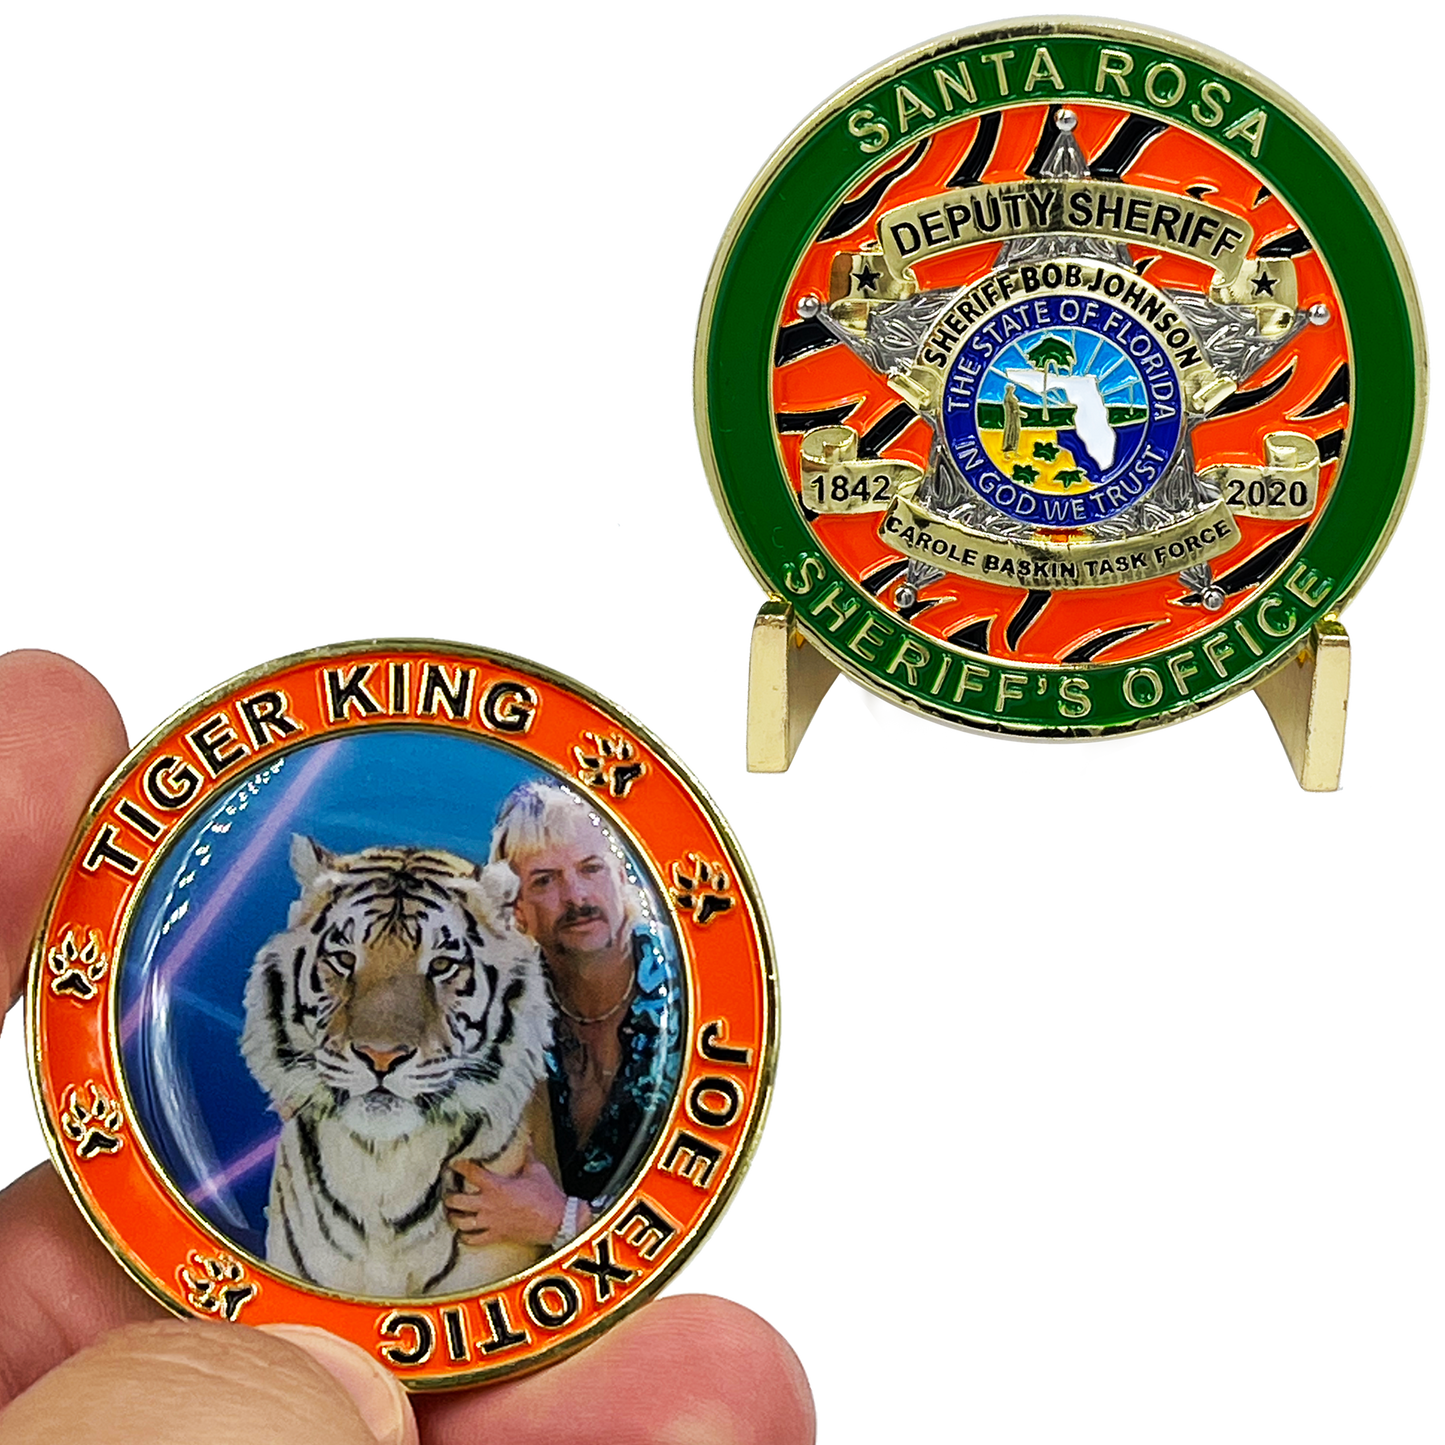 BL5-014 Santa Rosa Florida Sheriff's Office Challenge Coin Bob Johnson Tiger King Joe Exotic Carole Baskin Task Force parody Deputy Sheriff